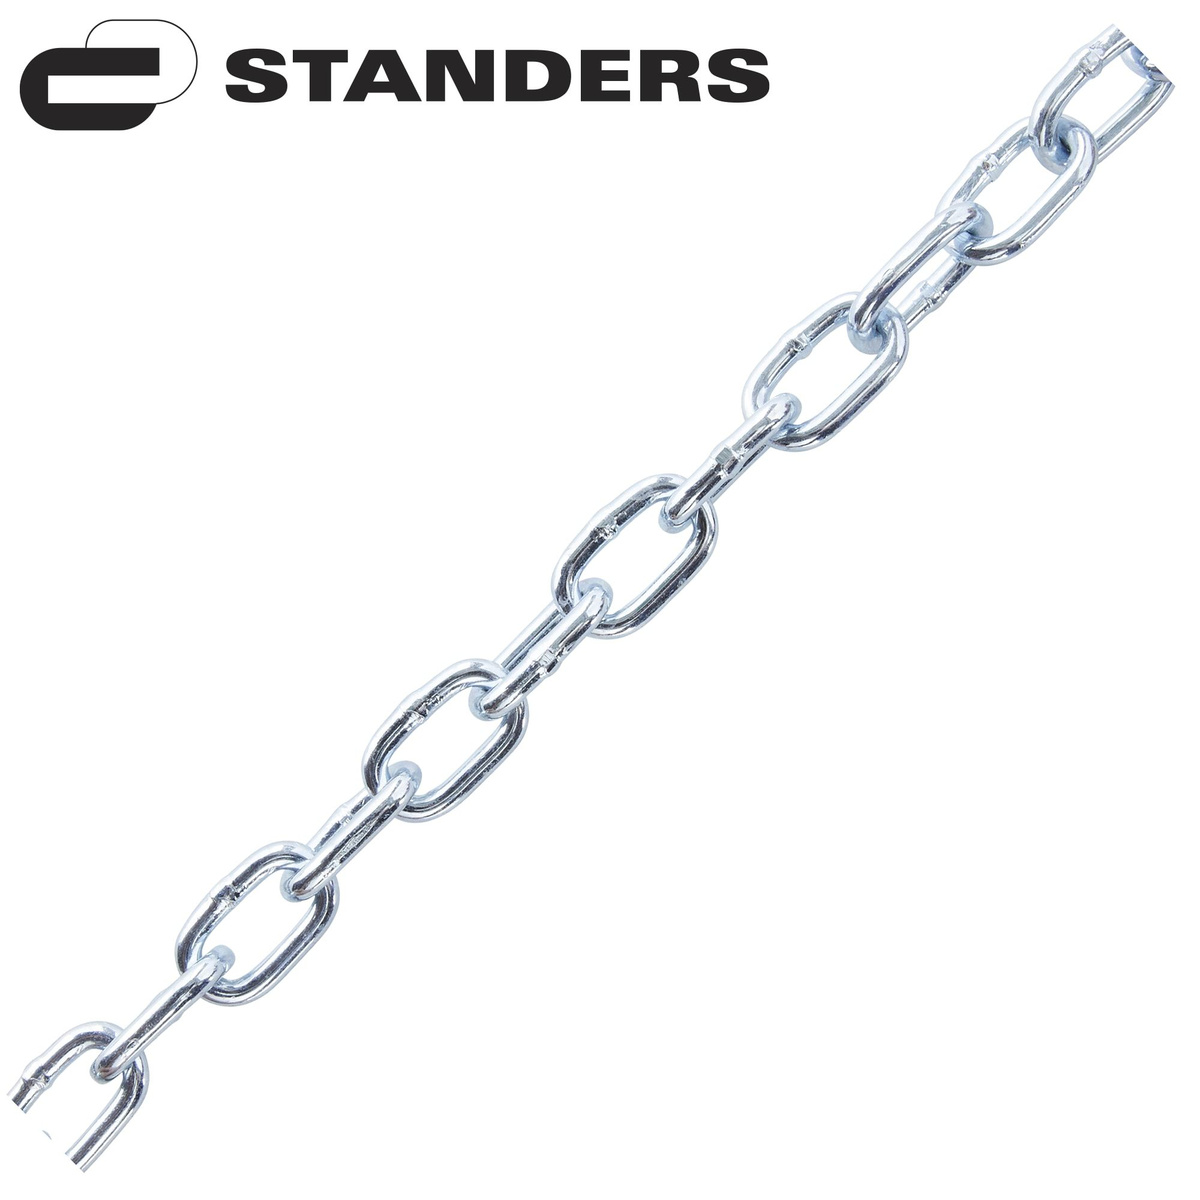 Цепь Standers оцинкованная сталь короткое звено 5 мм 10 м/уп.